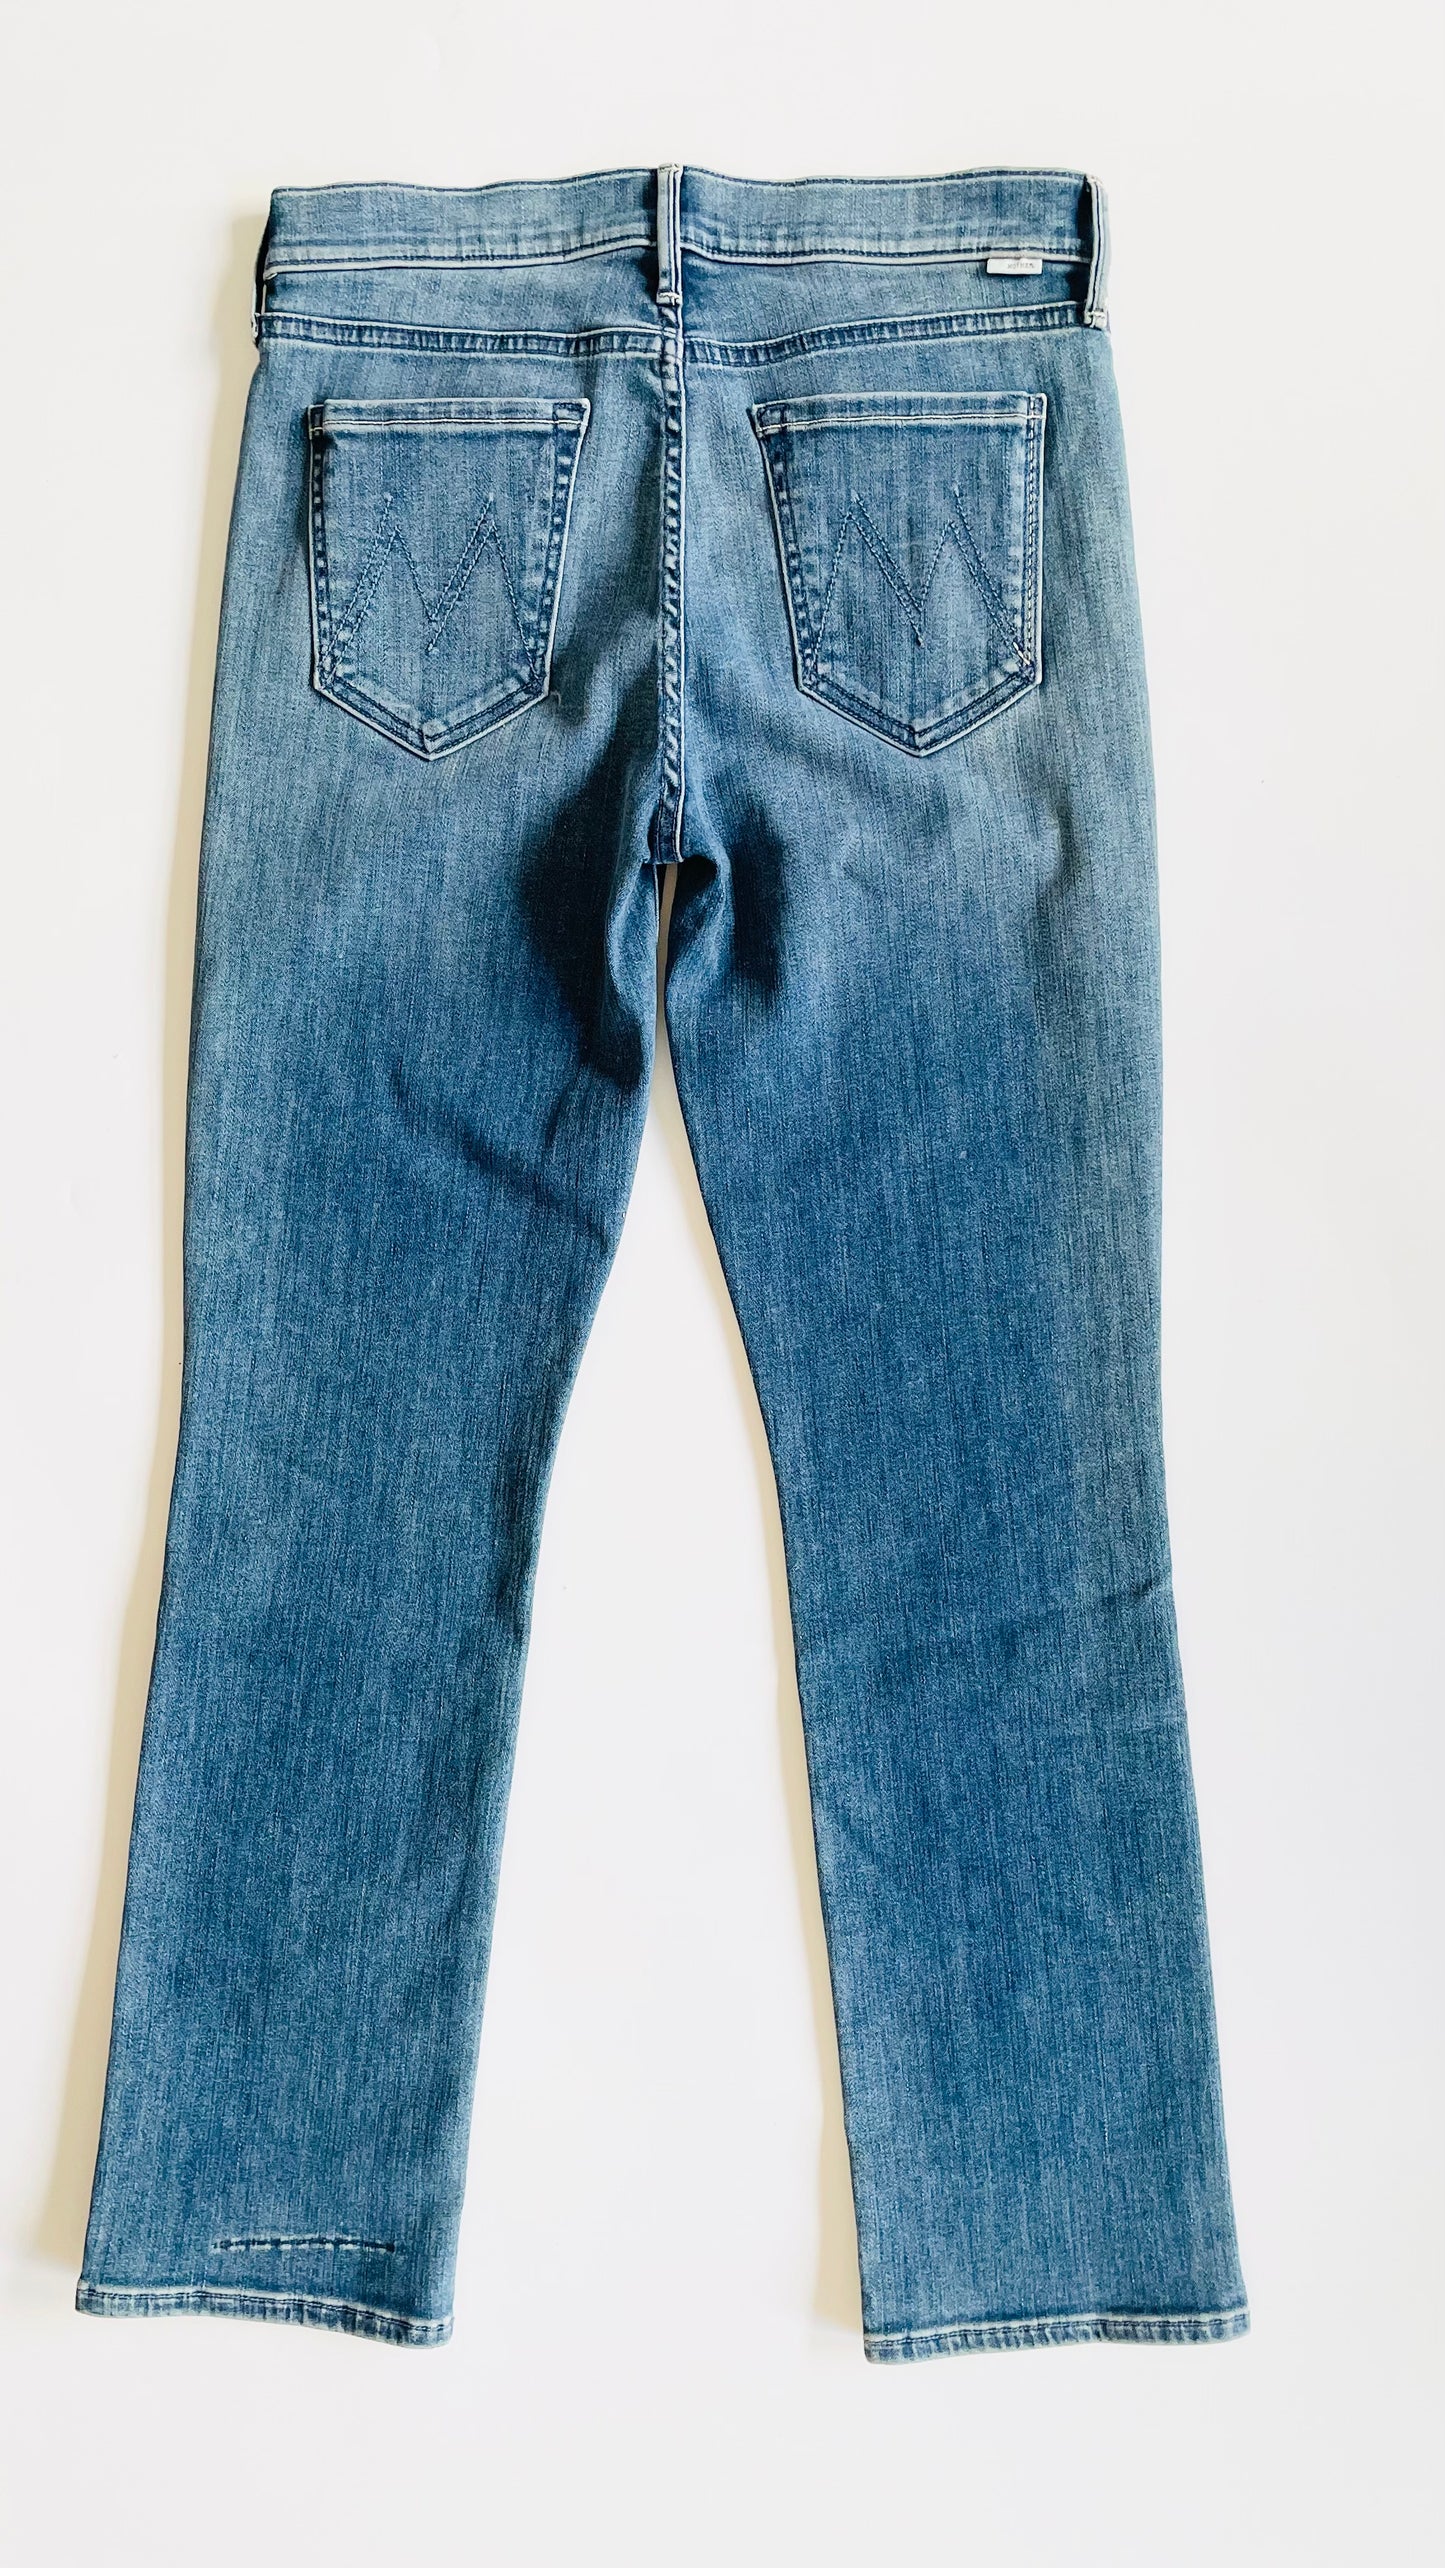 Pre-Loved MOTHER denim jeans NWOT - Size 30 x 28